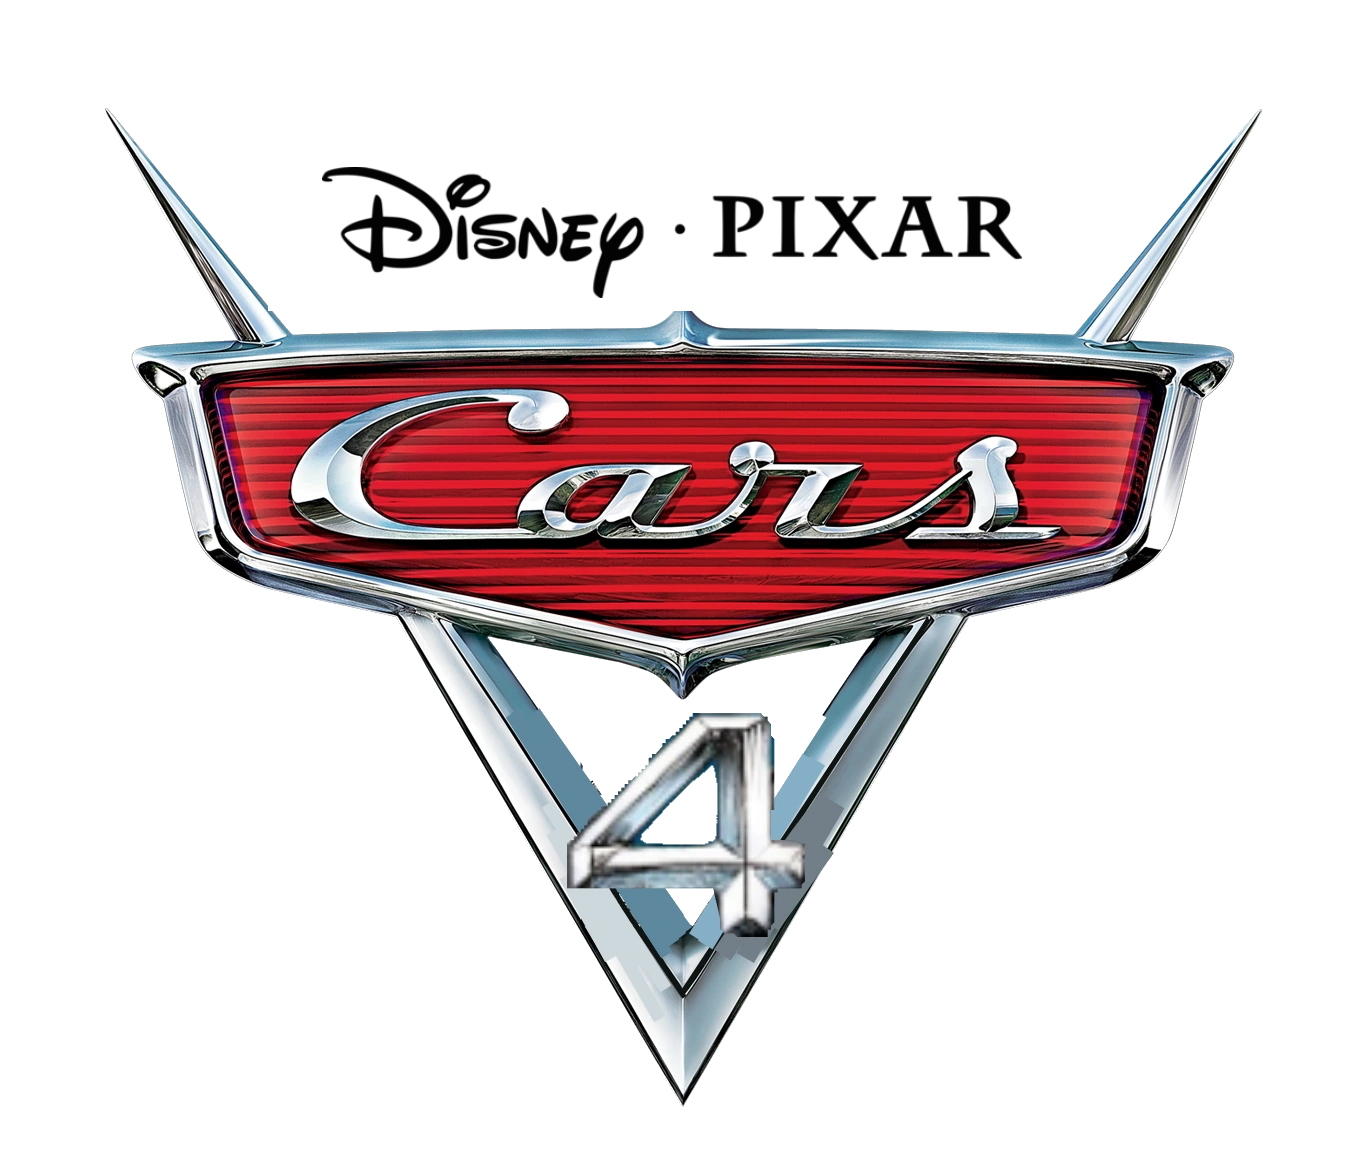 Cars 4 (2026 film) | Movie ideas Wiki | Fandom